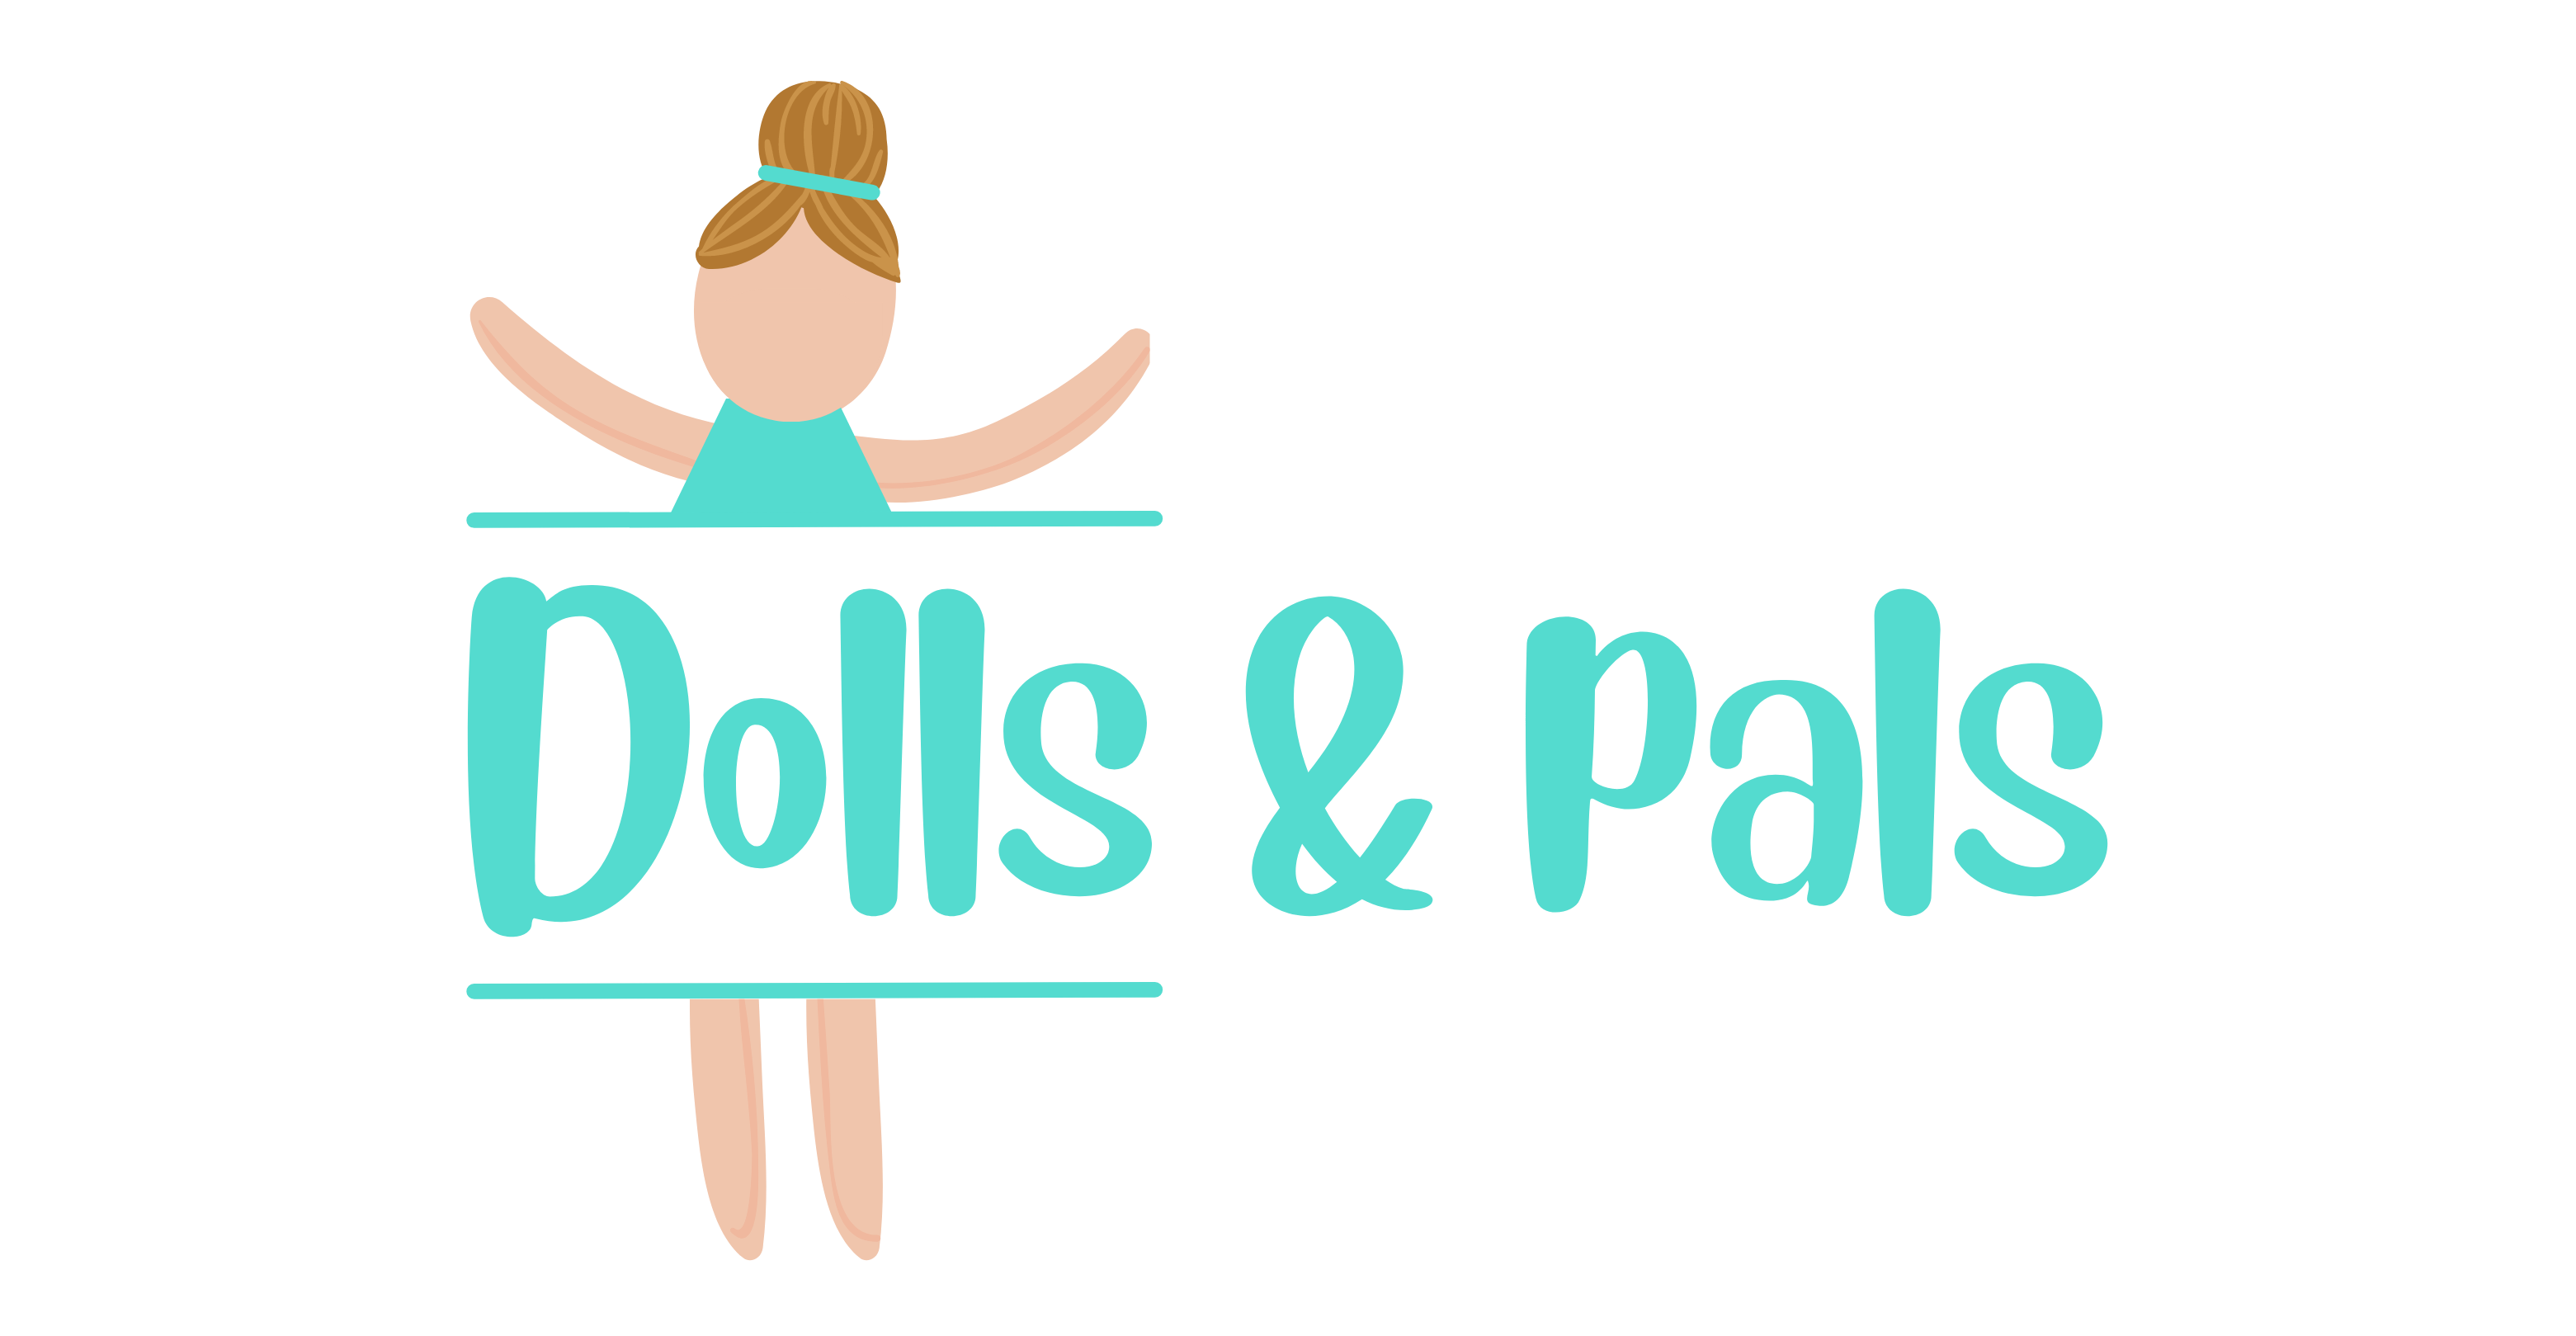 Logo Dolls & pals